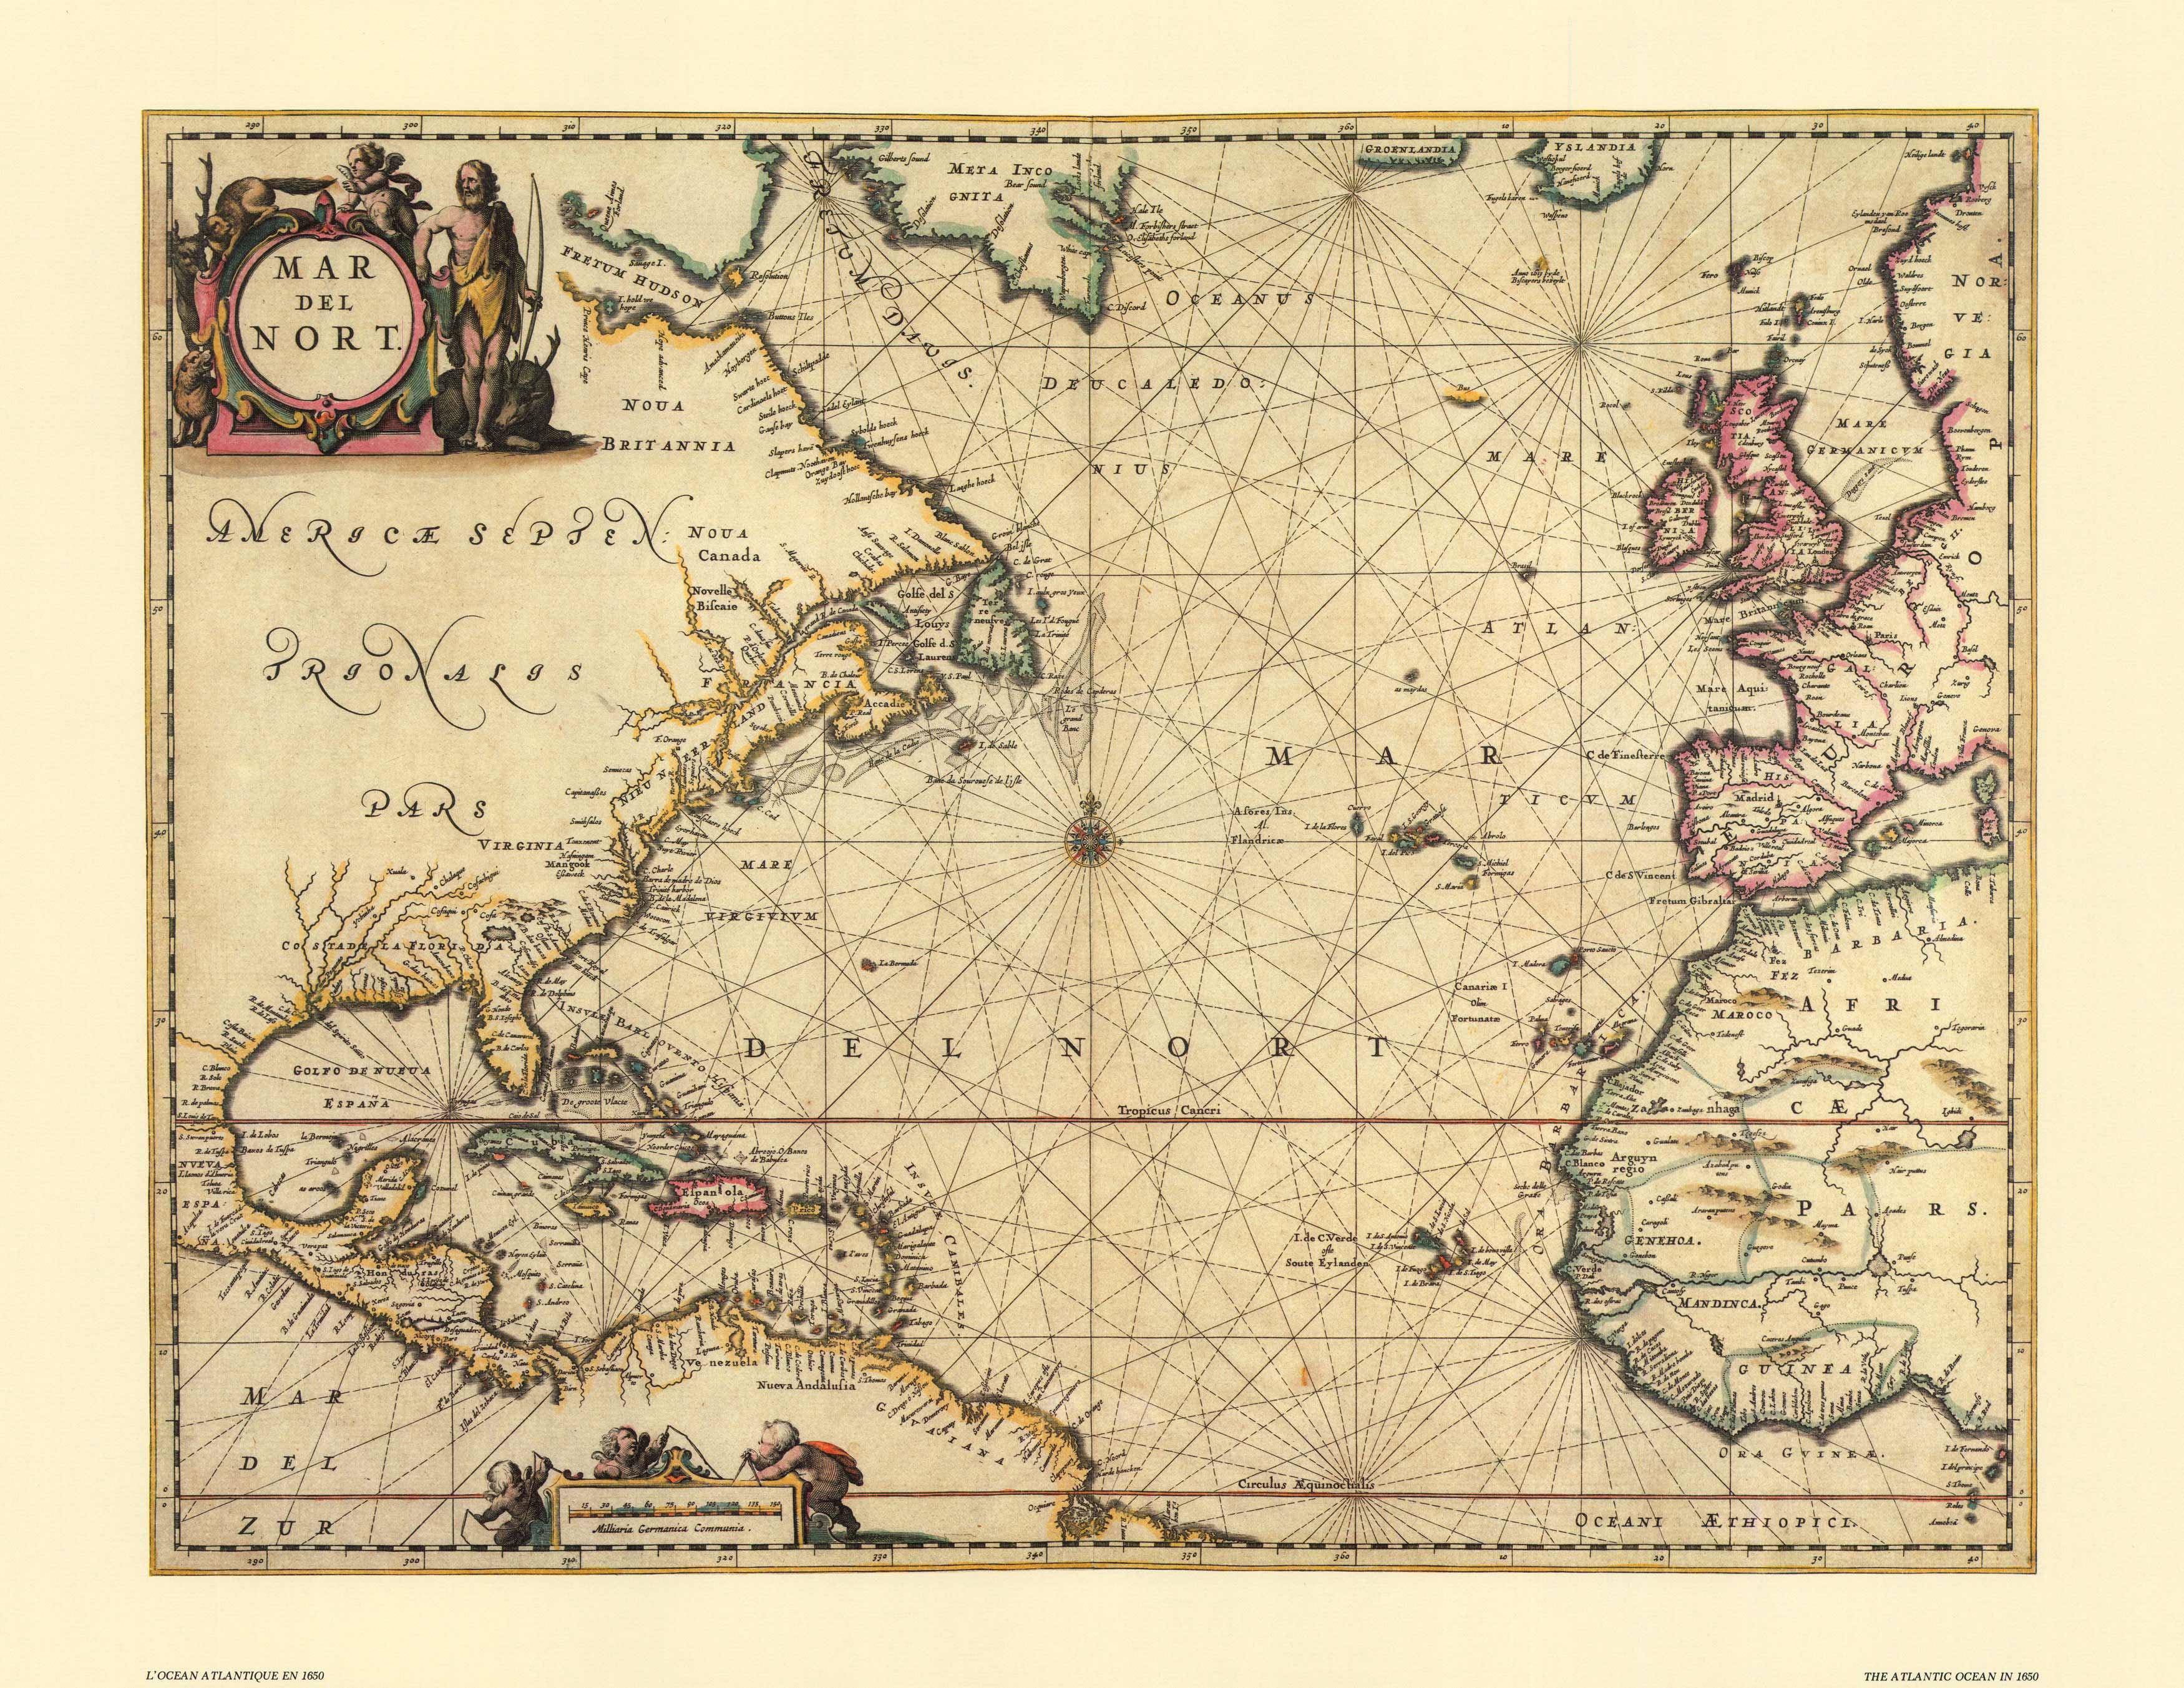 The Atlantic Ocean in 1650